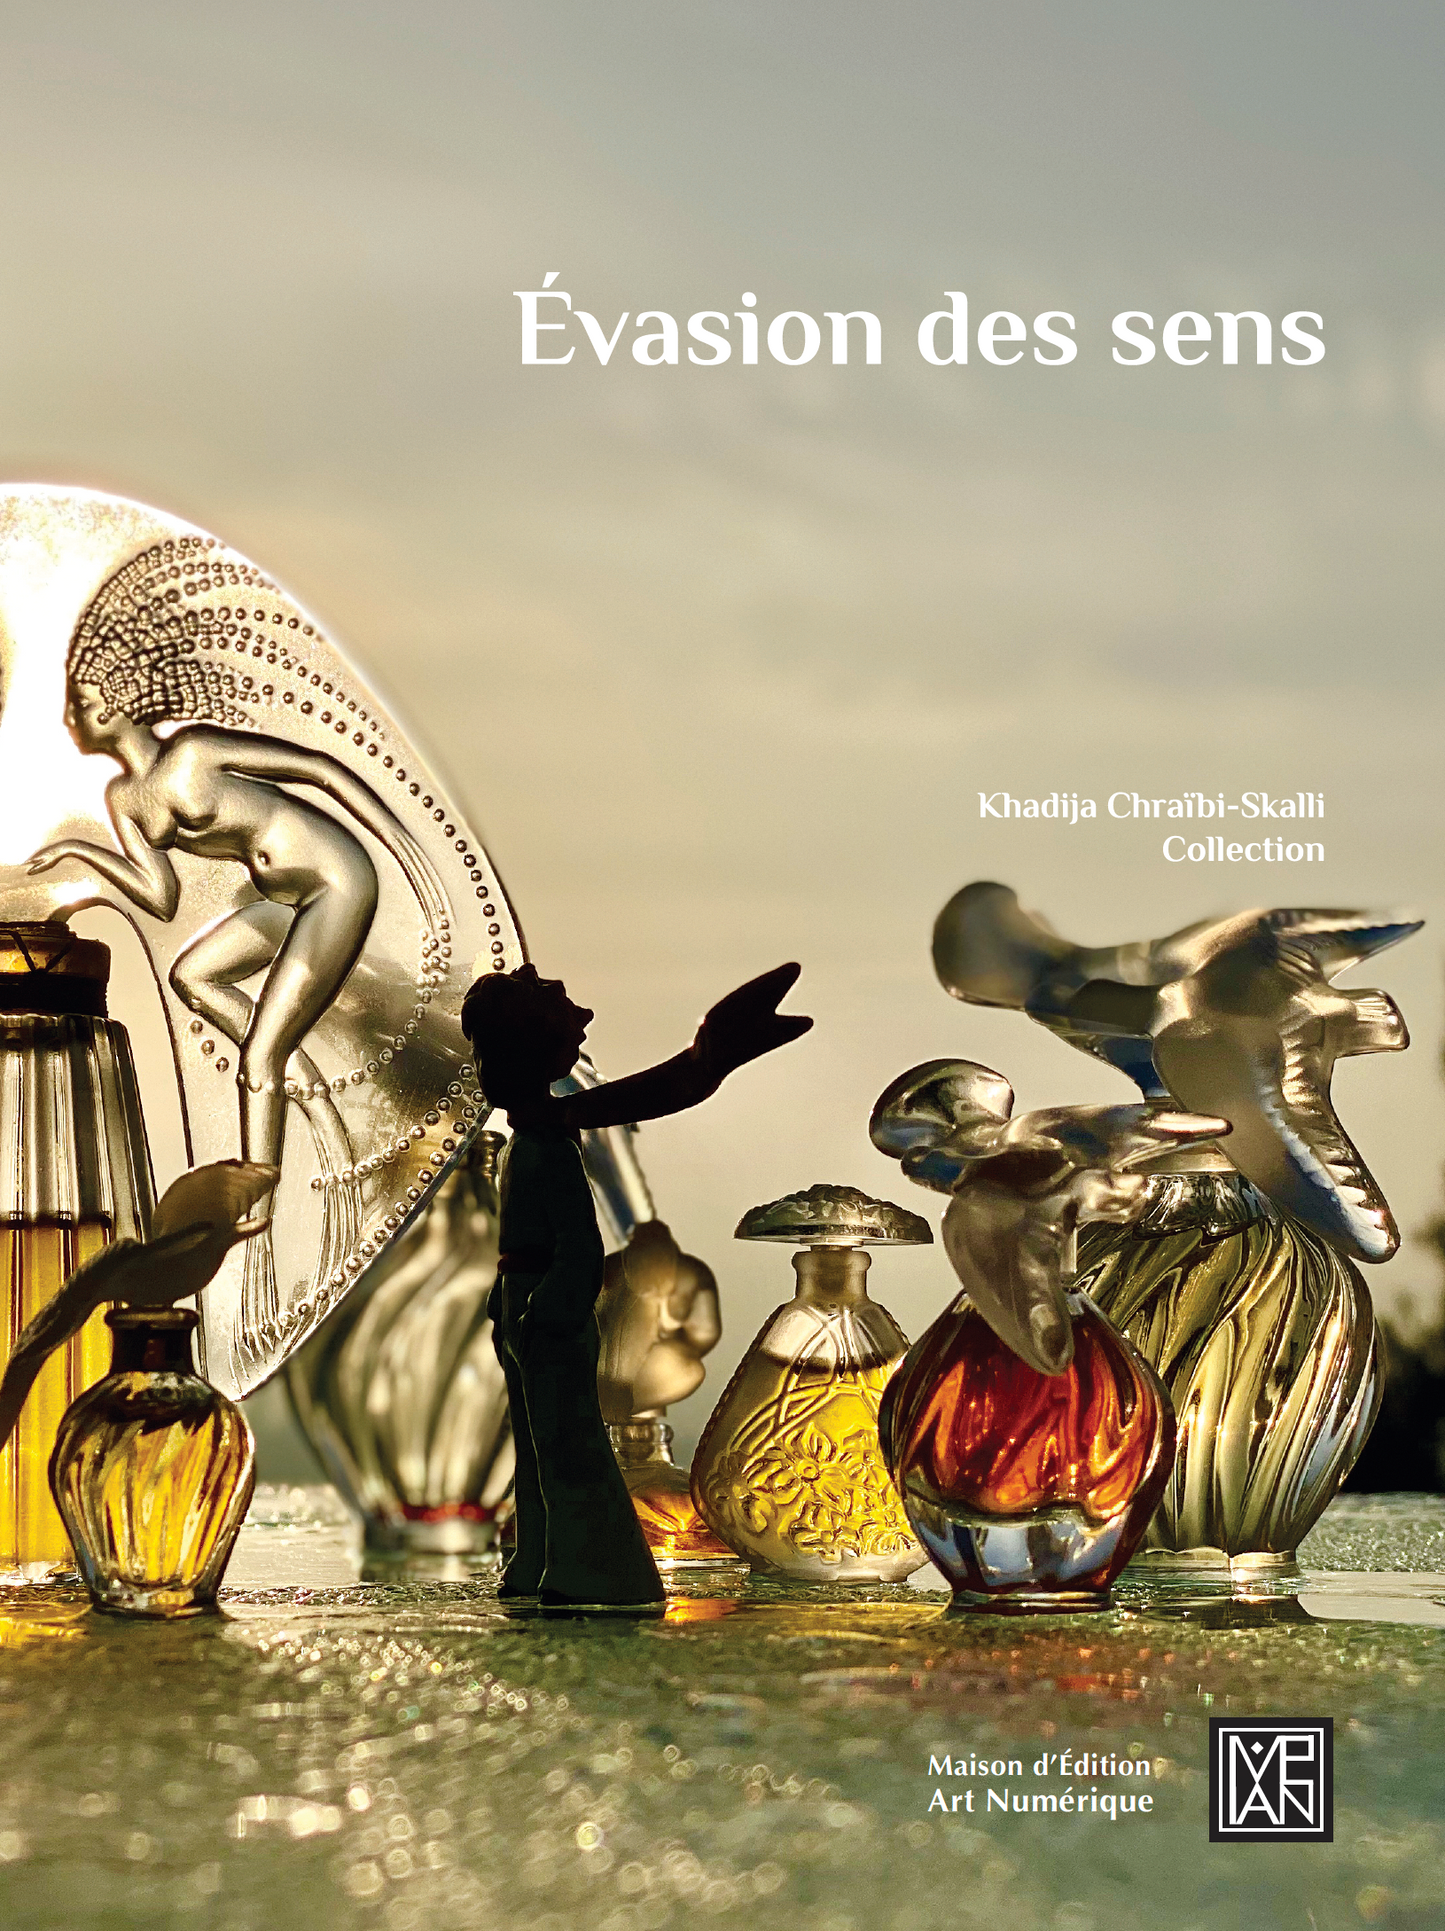 "Escape of the senses" - Private collection of Khadija Chraïbi-Skalli